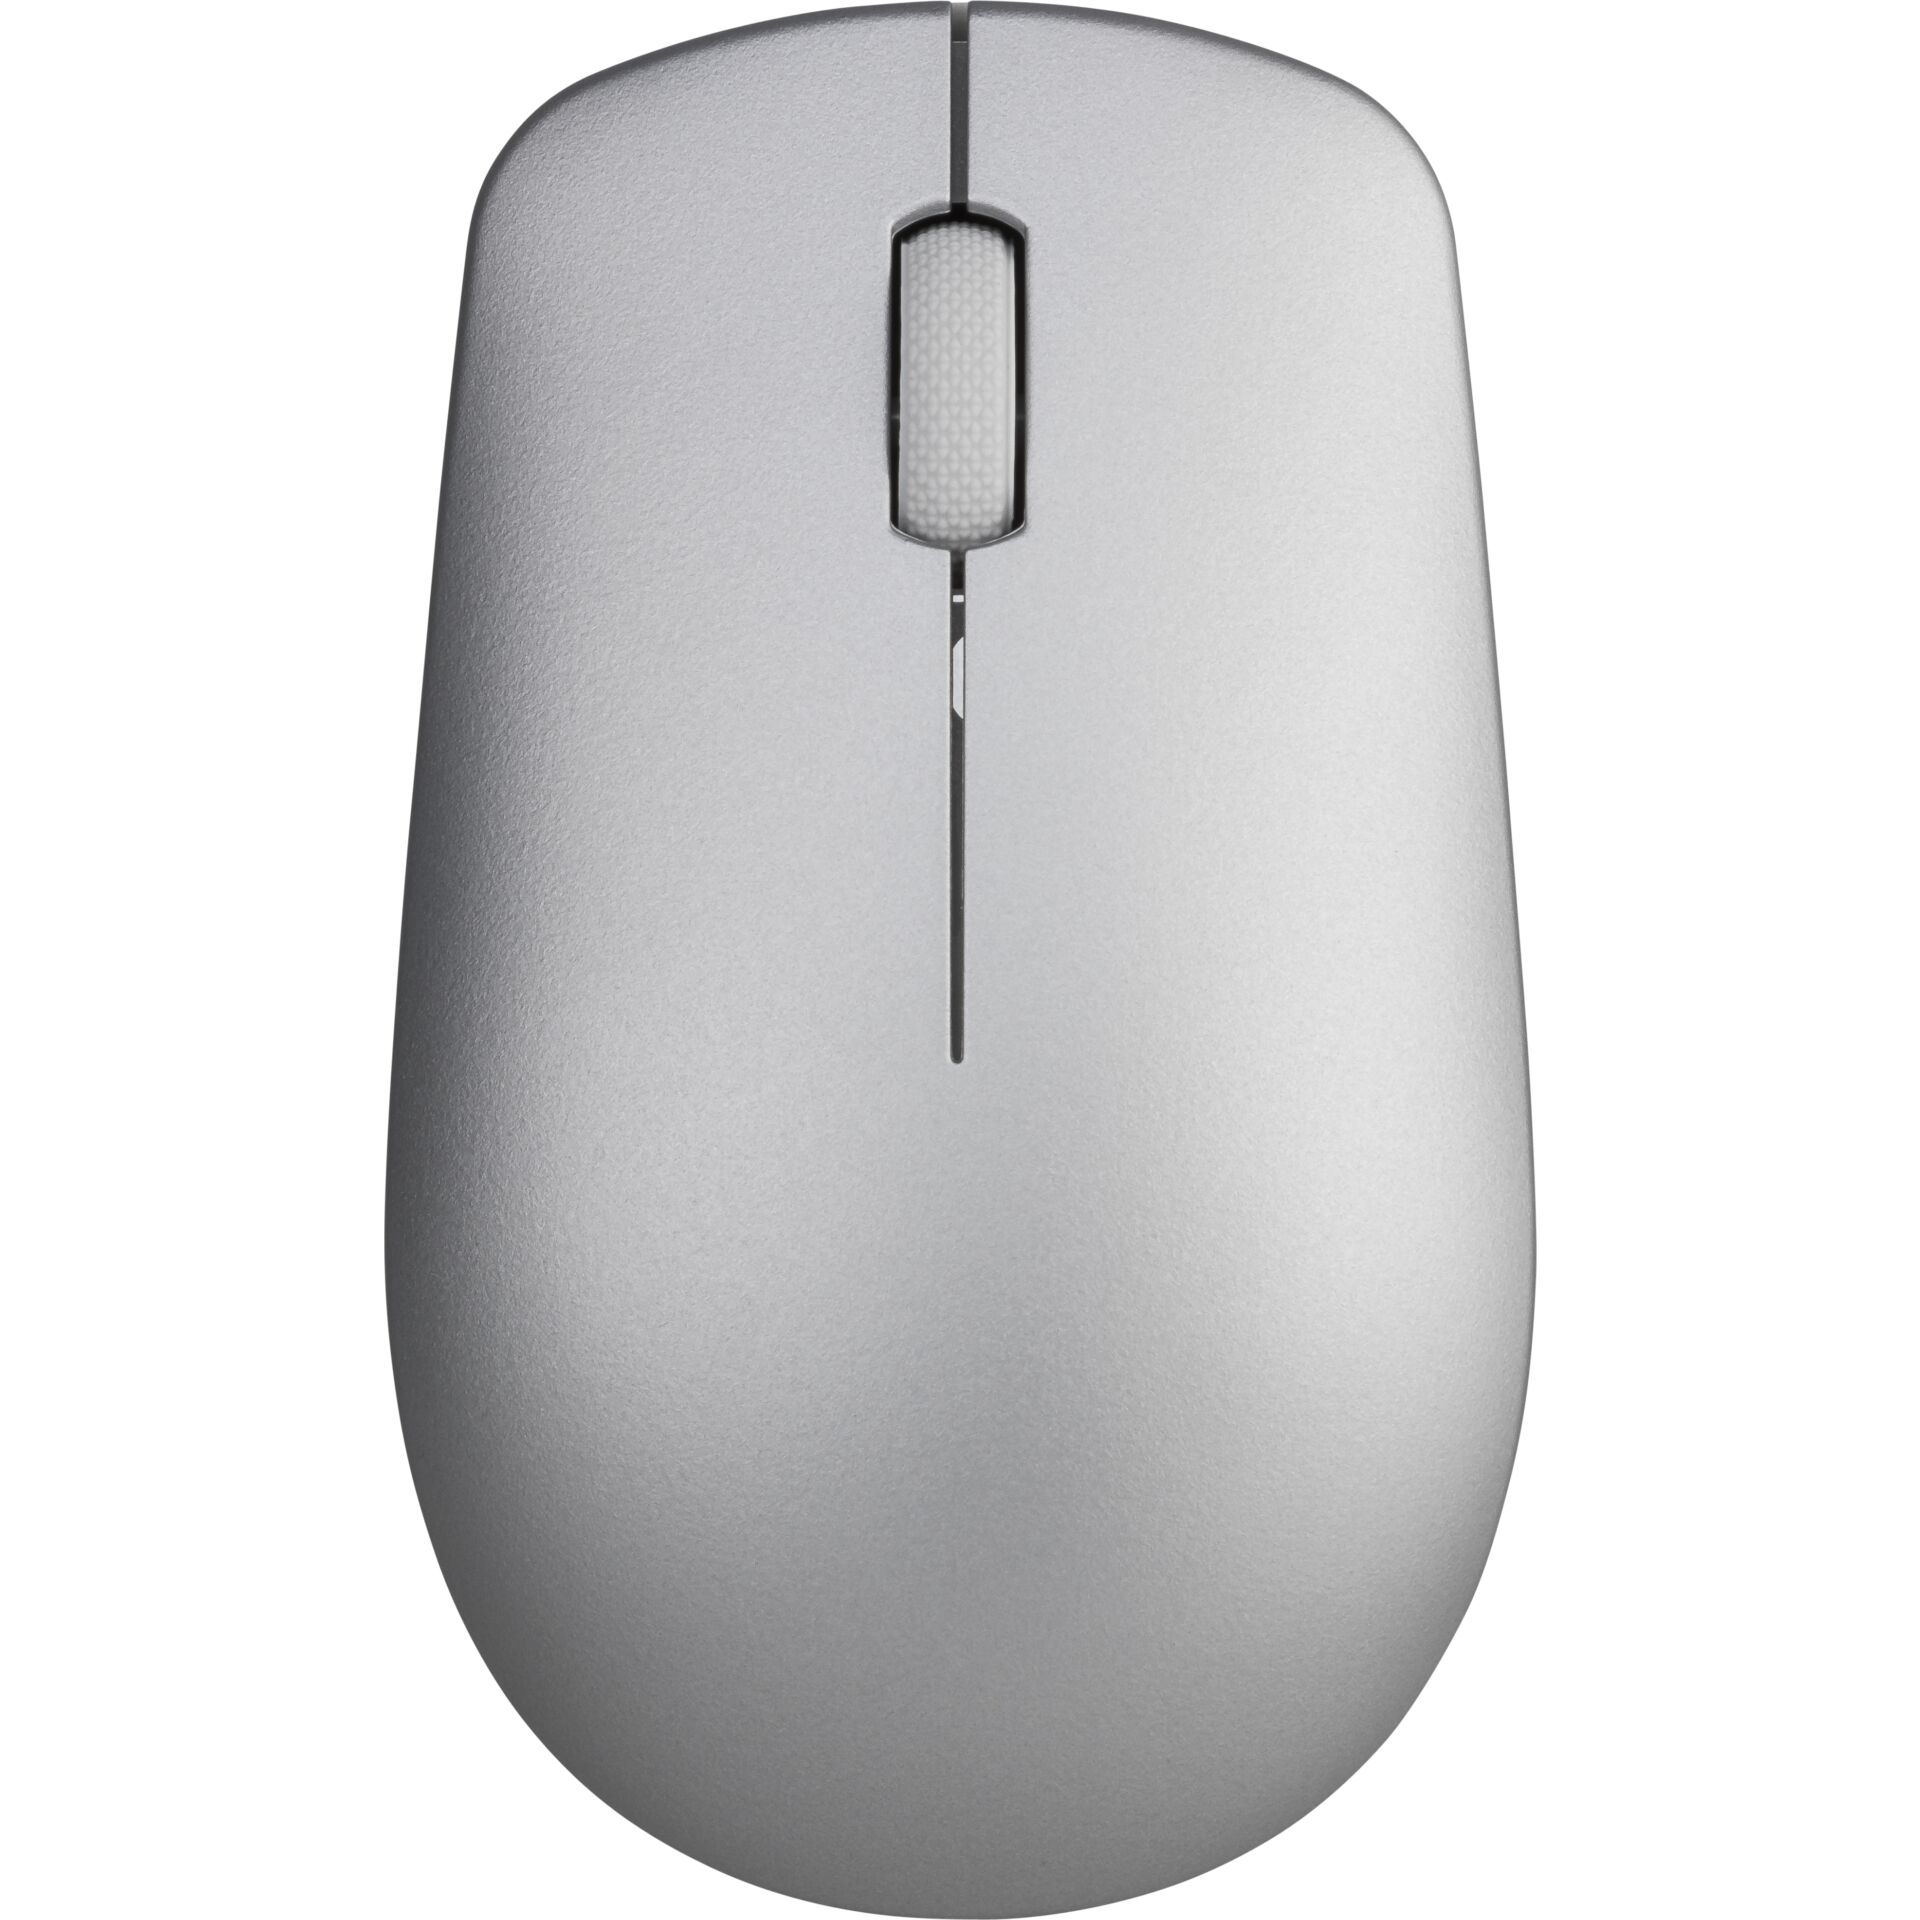 Lenovo 530 wireless mouse platinum grey